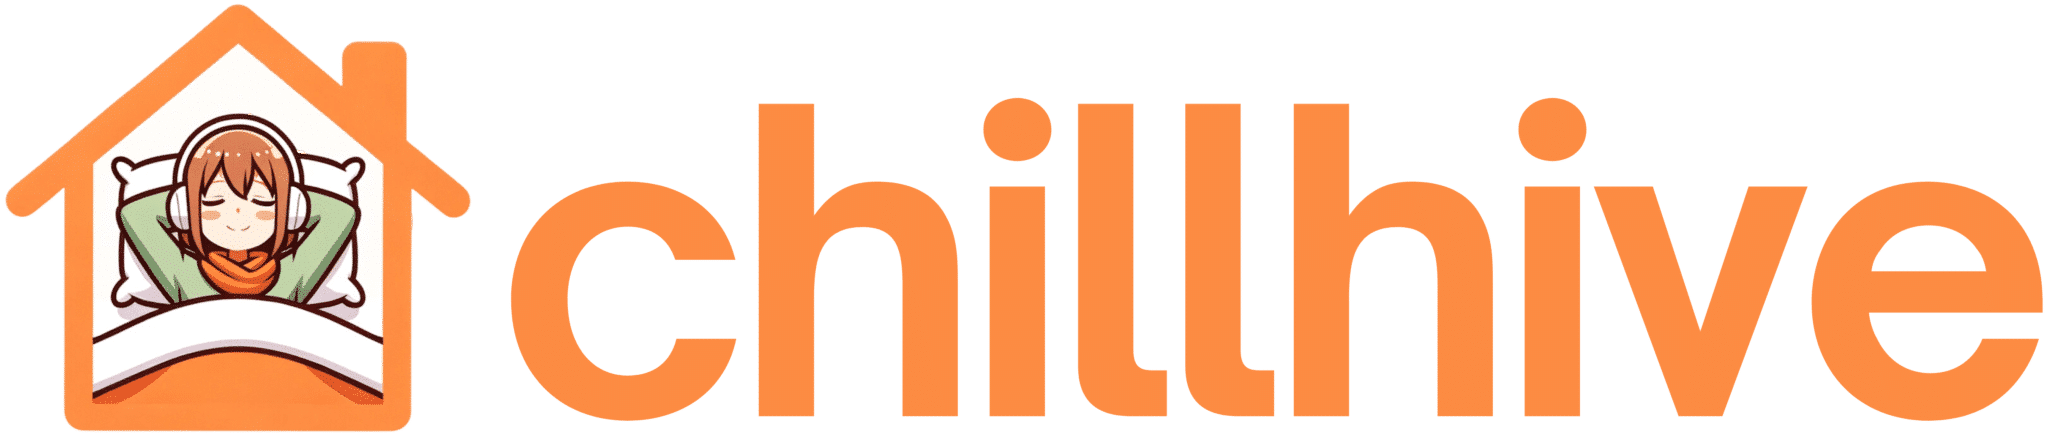 Chillhive logo